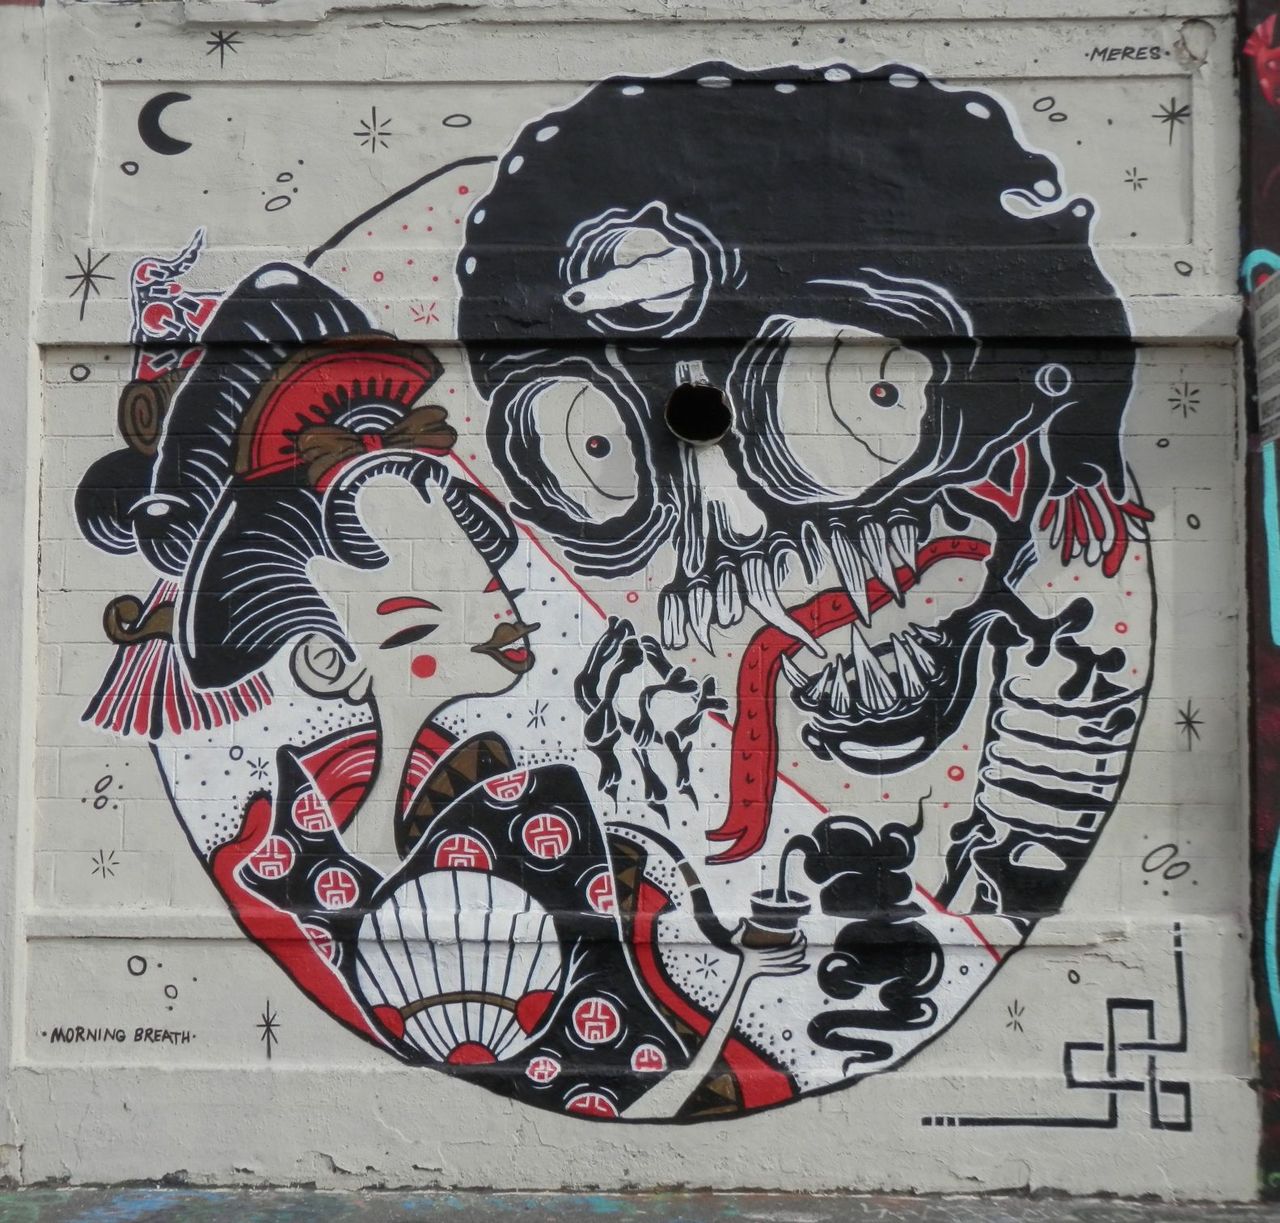 #Streetart #graffiti Morning Breath by The Yok & She Ryo at #5pointz in Queens, NY. https://t.co/LbCVhfdSVq